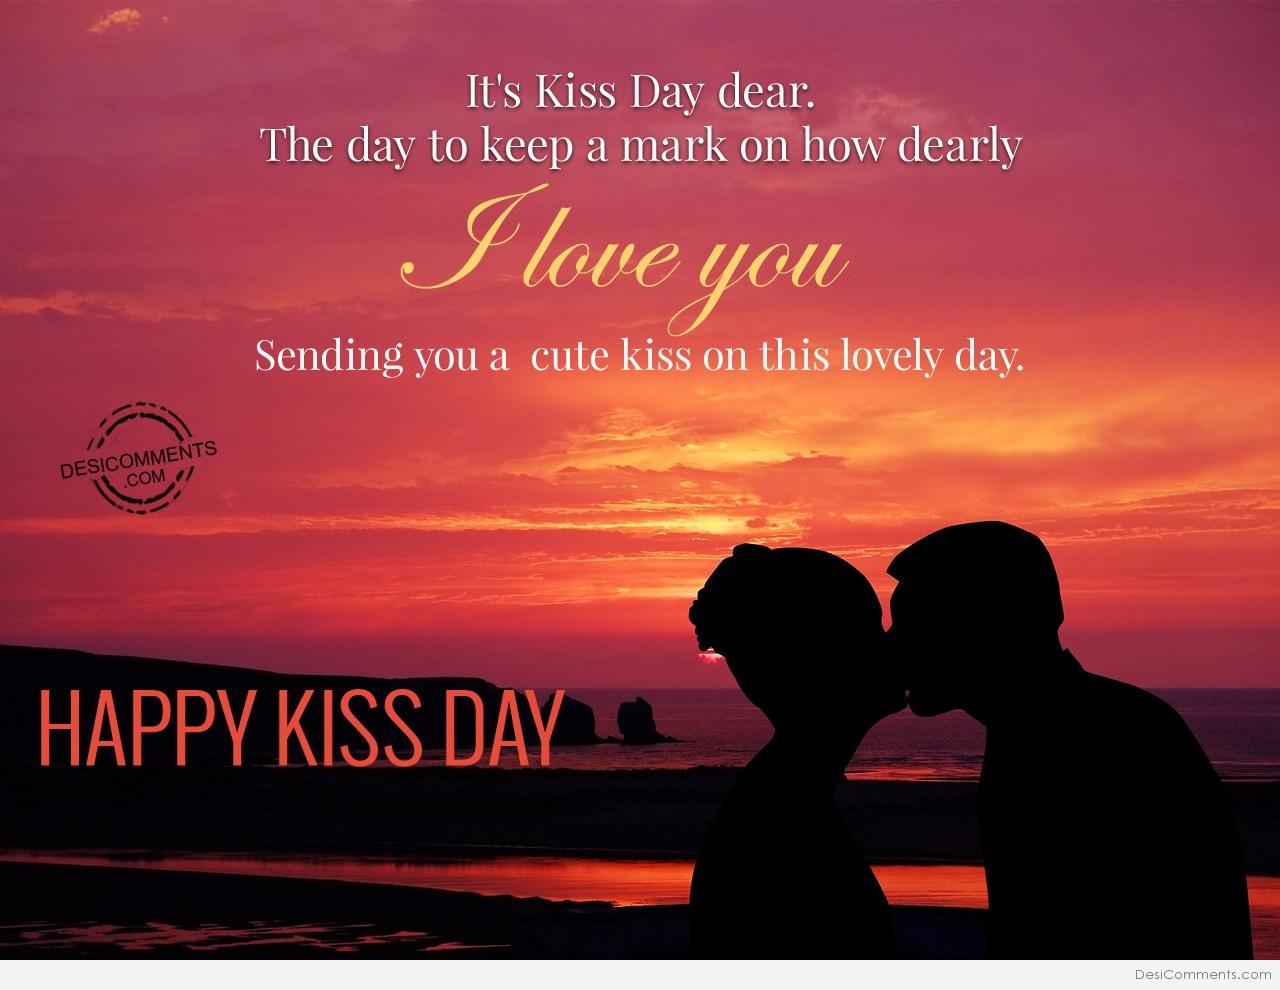 It’s Kiss day dear